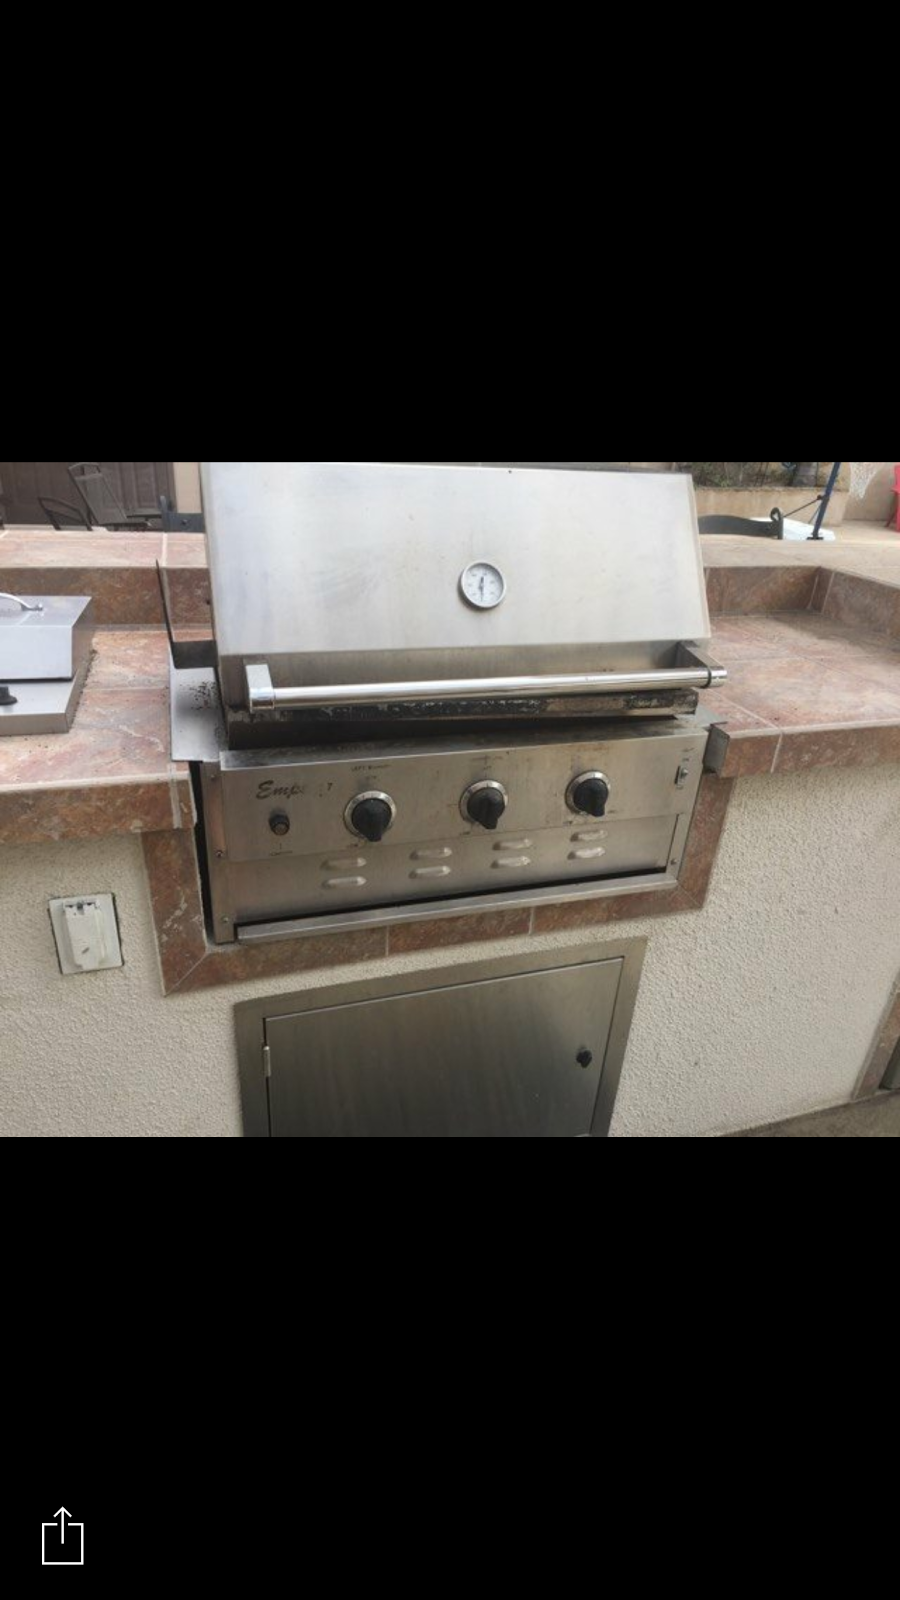 Mdc Barbecue Clean And Repair | 23631 Wakefield Ct, Laguna Niguel, CA 92677 | Phone: (951) 283-9079